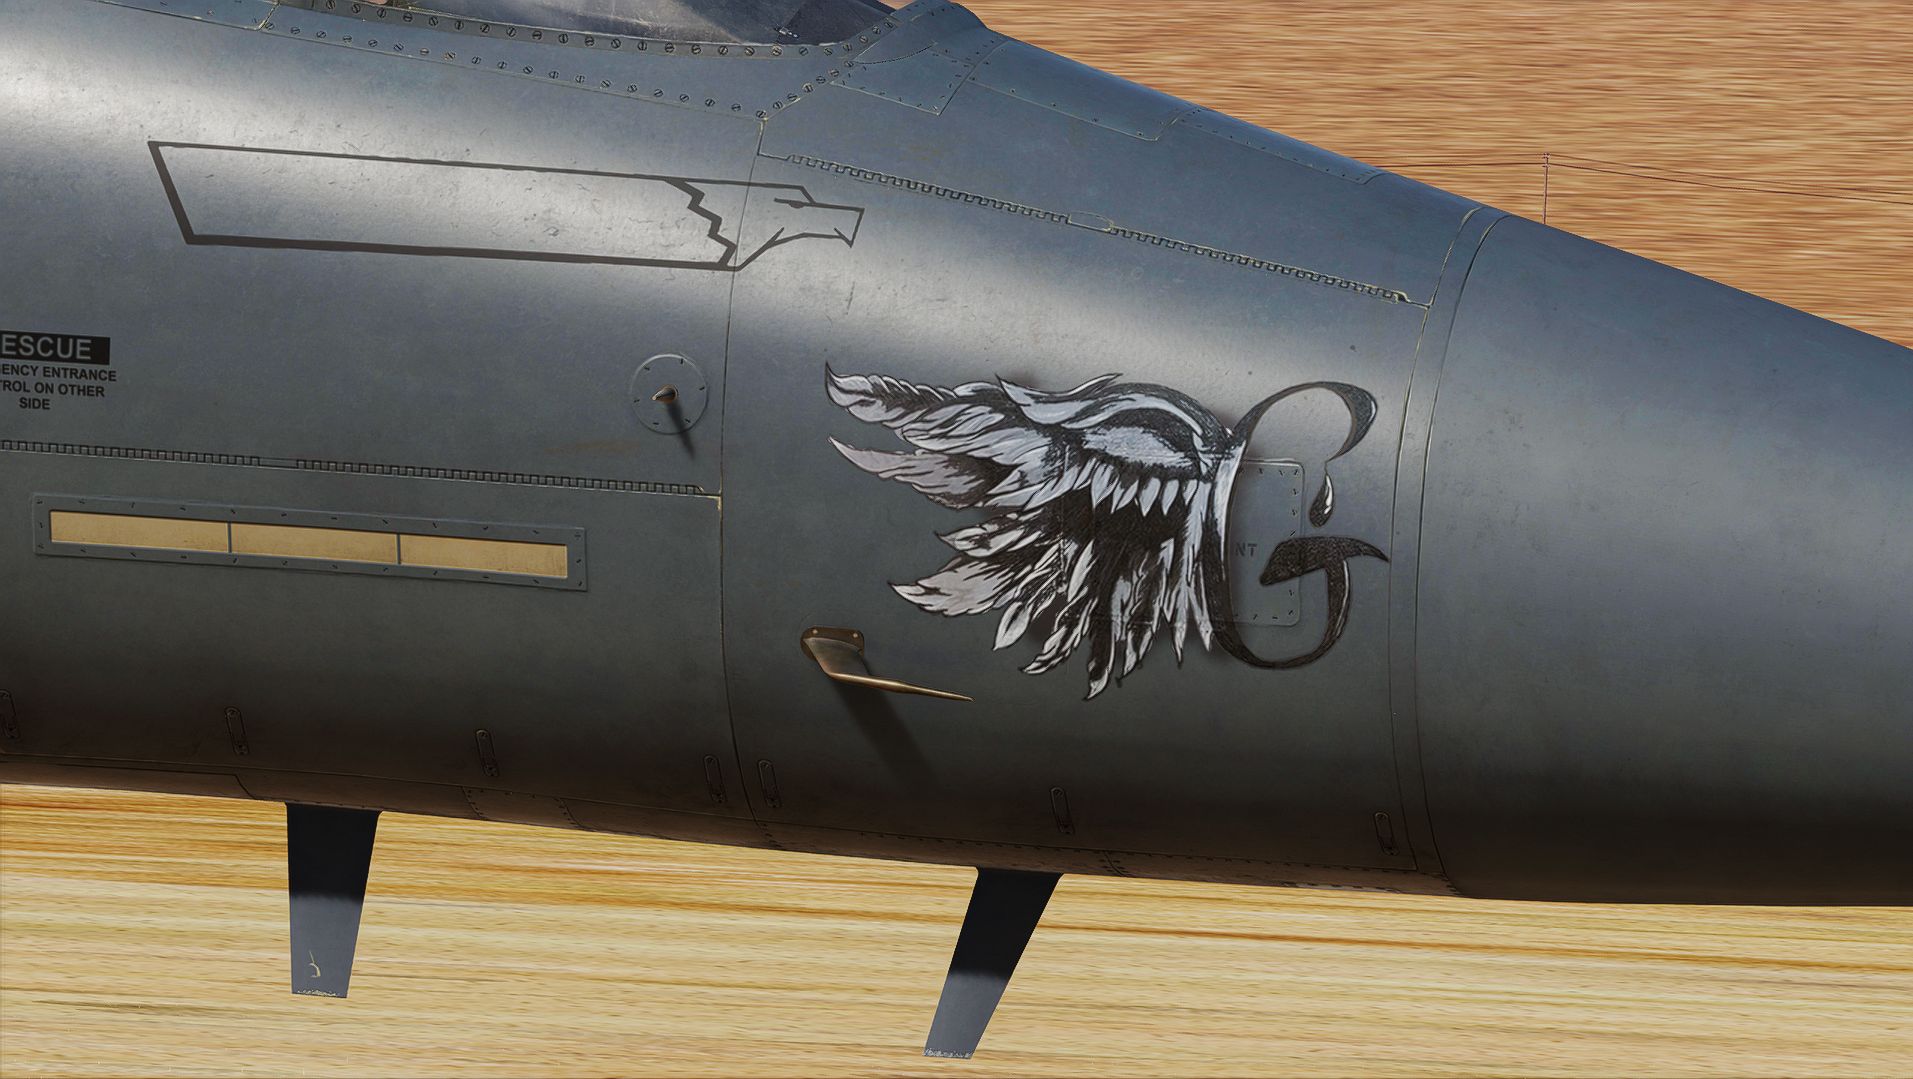 F-15E Strike eagle SJ 87-177 "G"